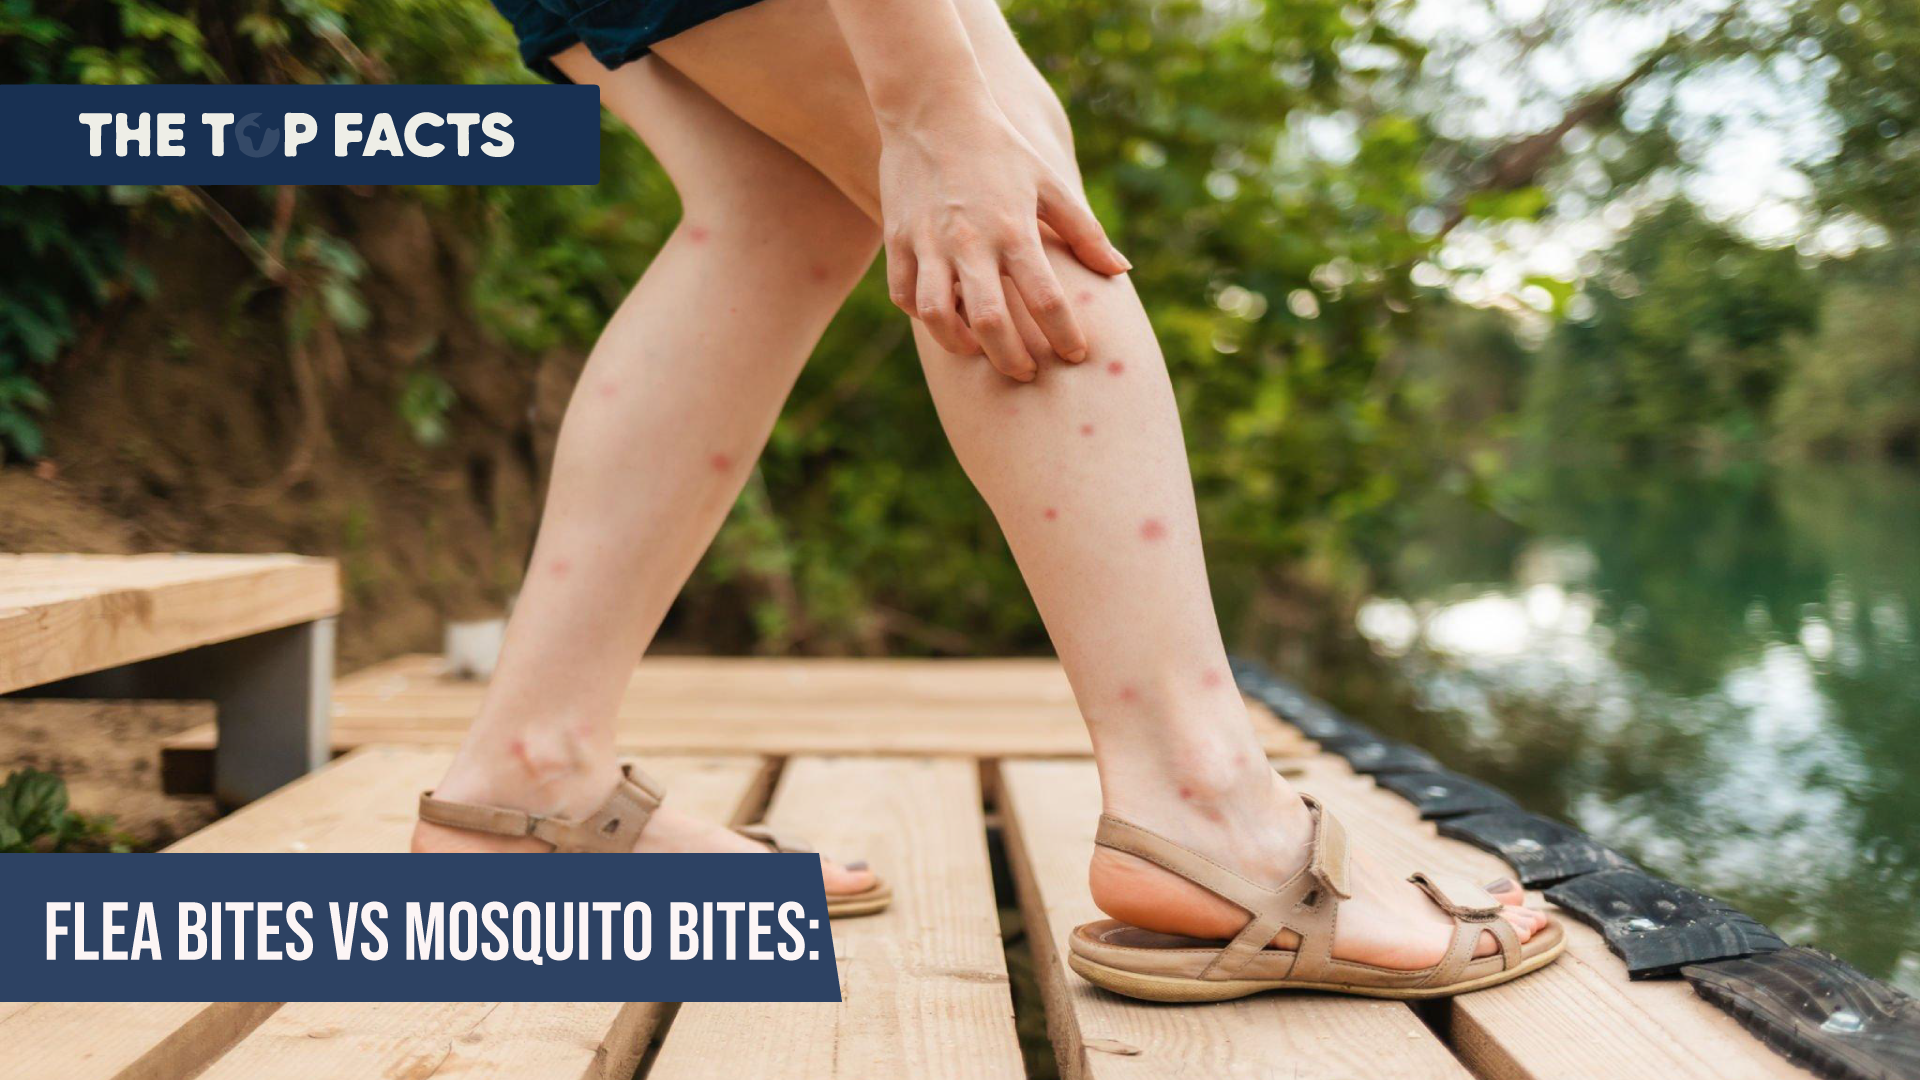 Flea bites vs mosquito bites